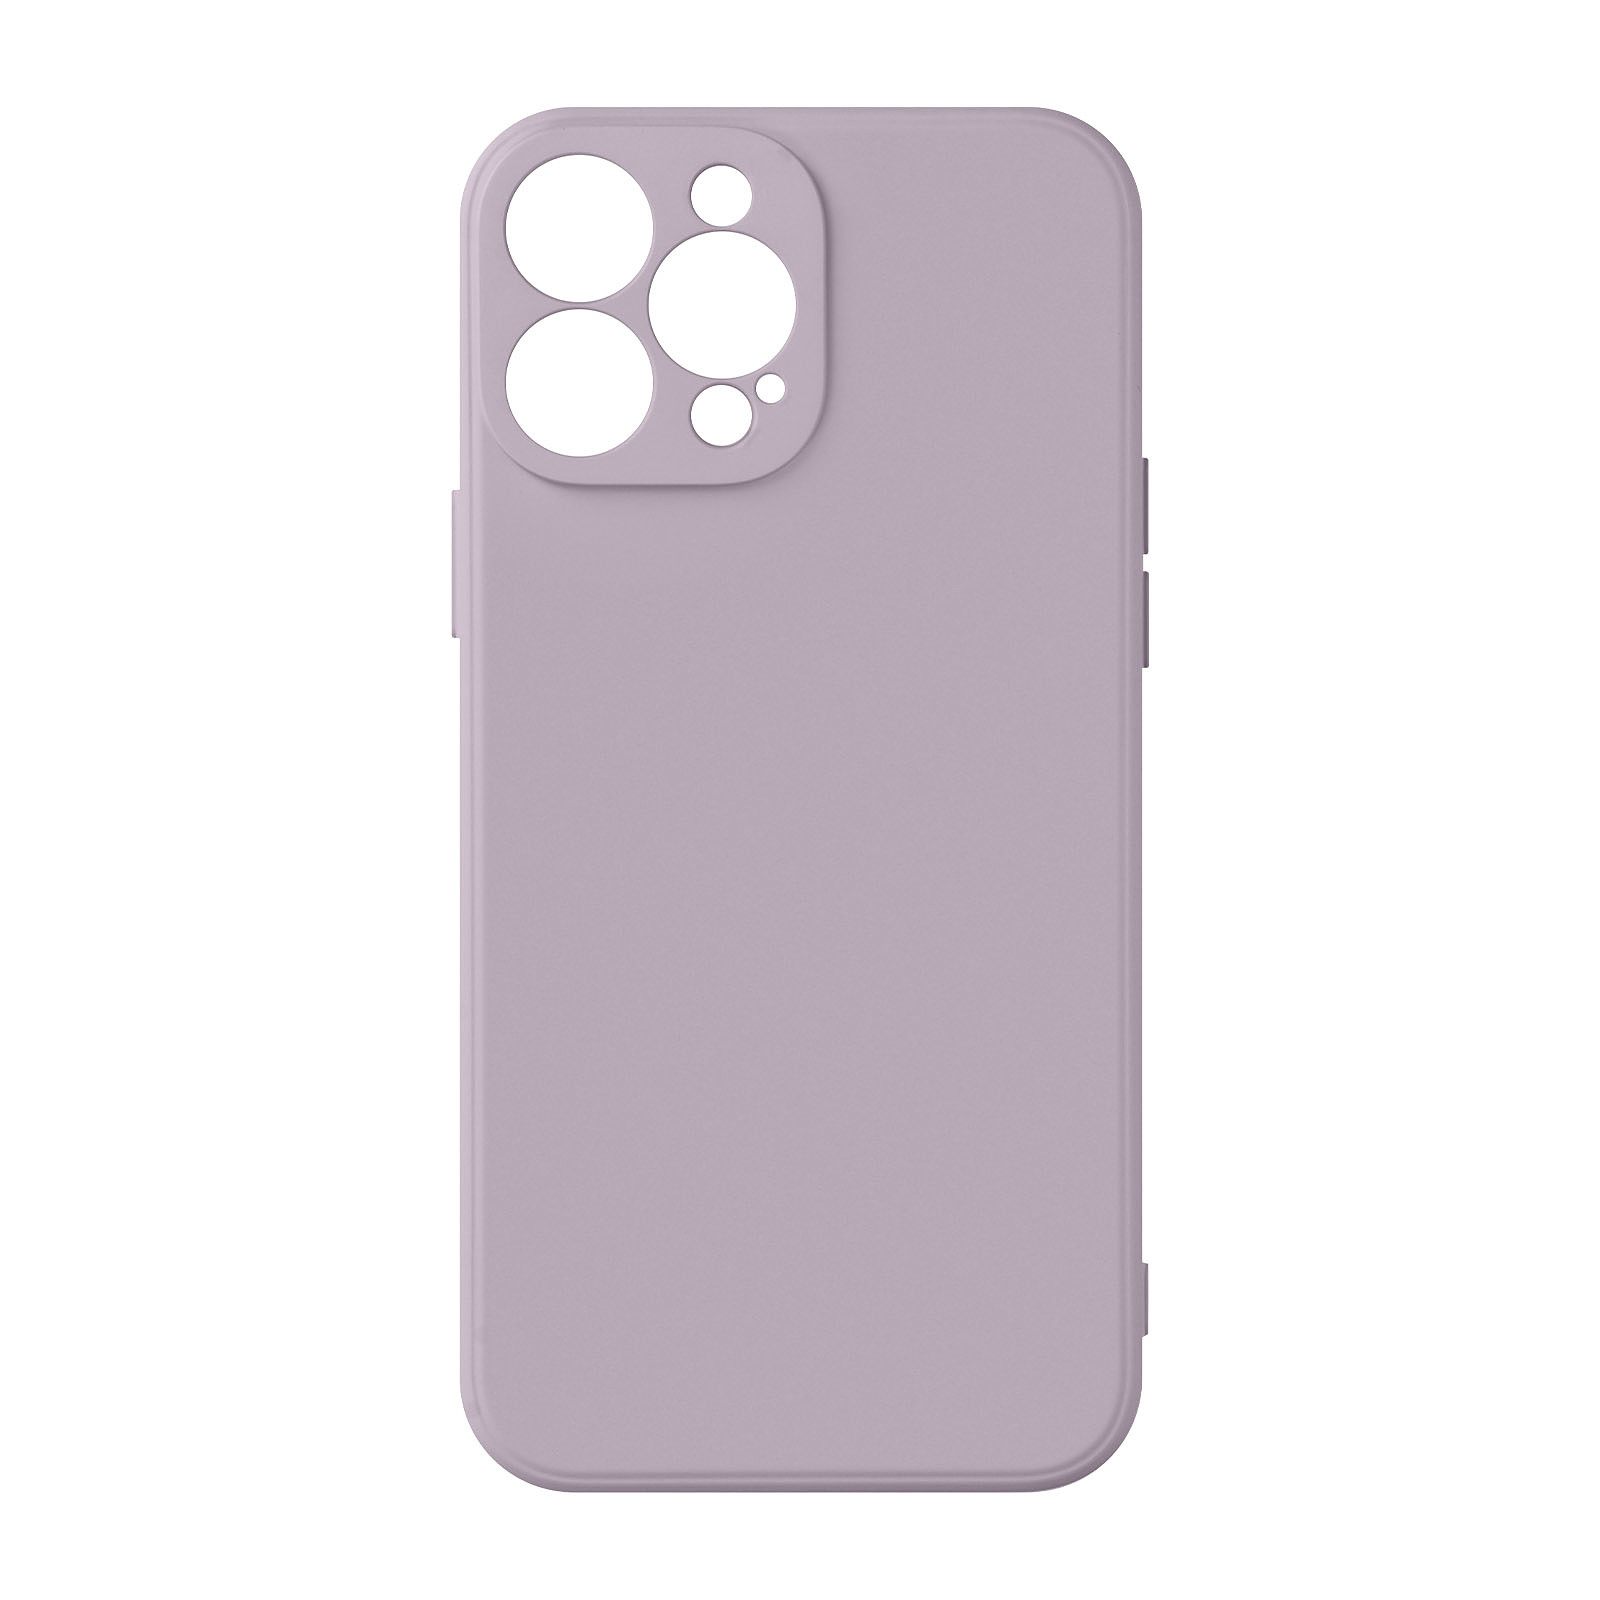 Avizar Coque pour iPhone 13 Pro Silicone Semi-Rigide avec Finition Soft Touch violet - Coque telephone Avizar